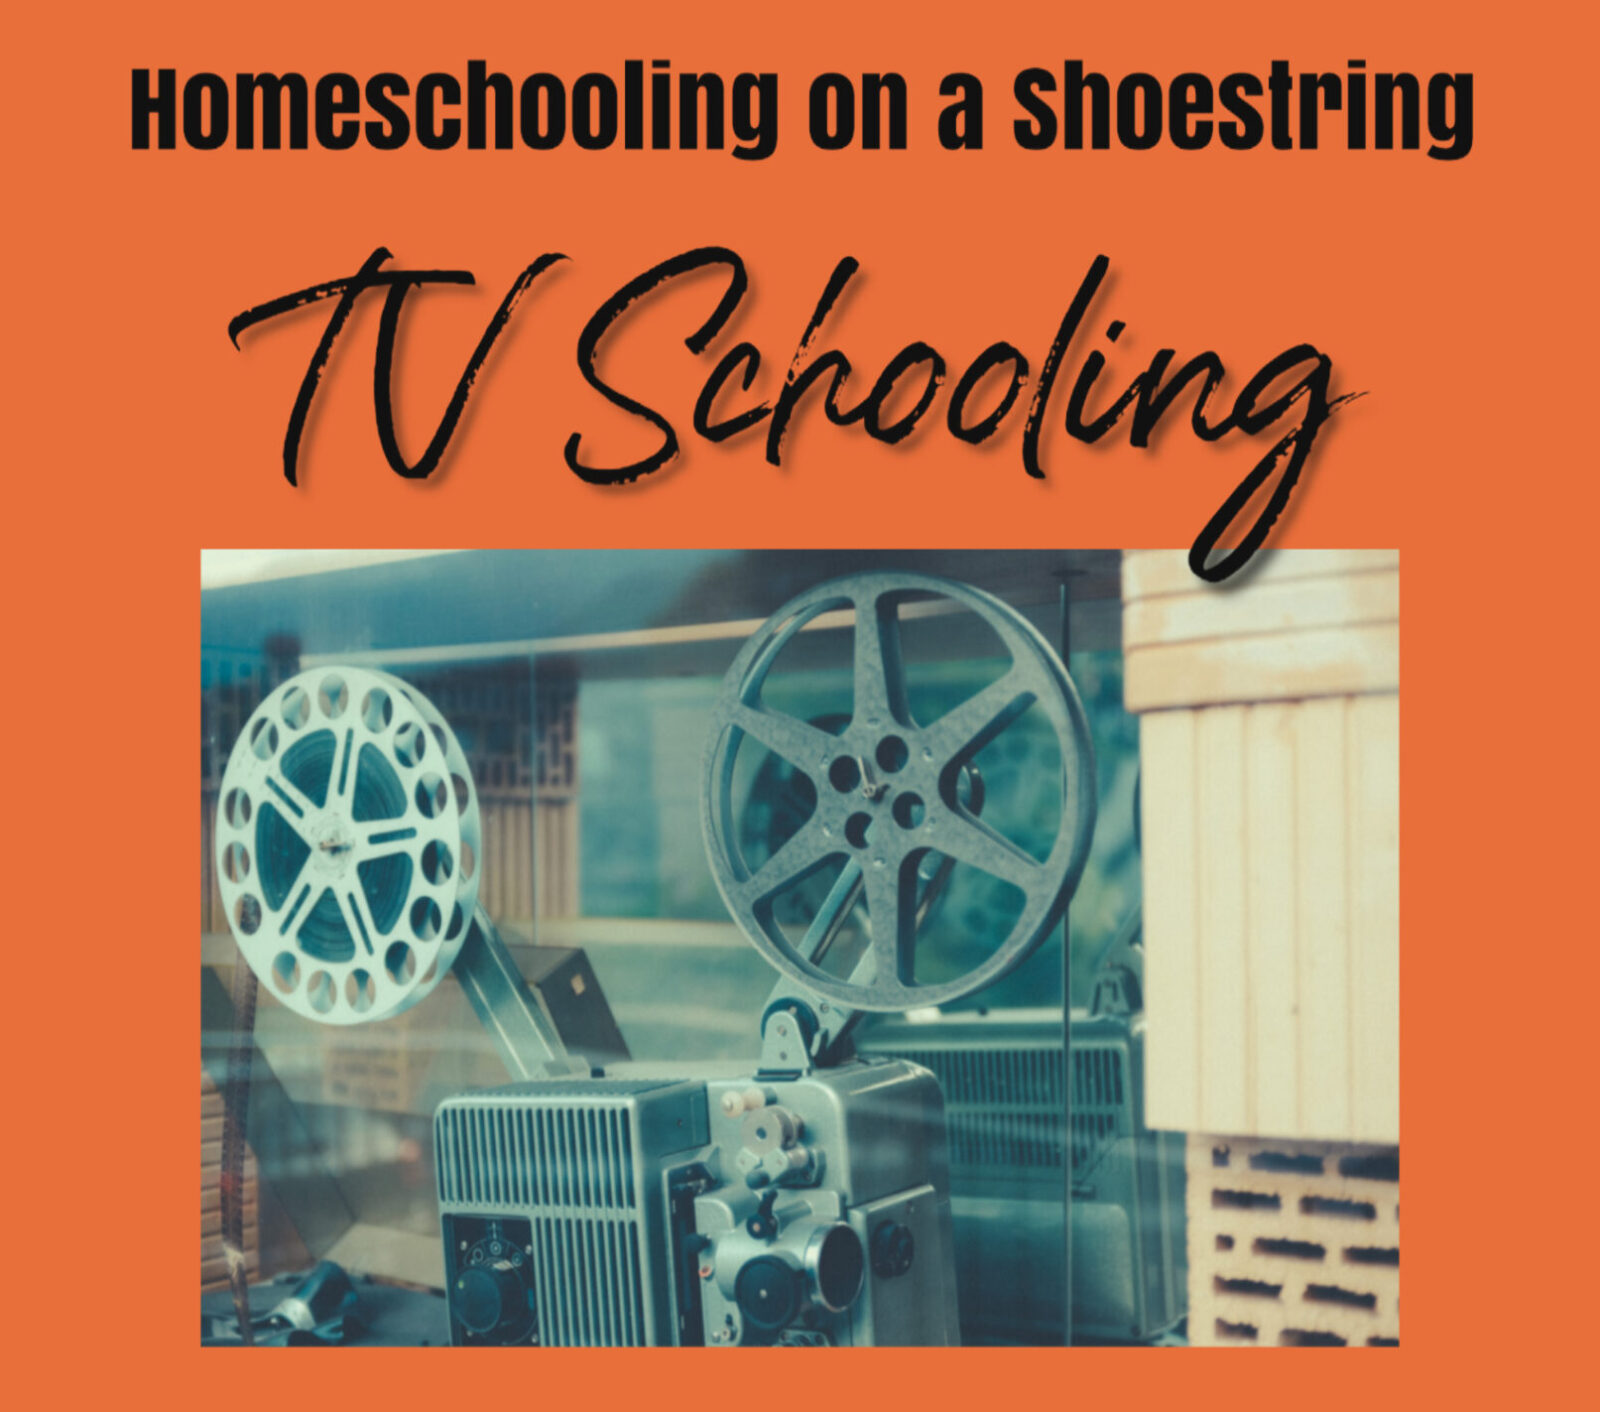 TV Schooling - Homeschooling on a Shoestring